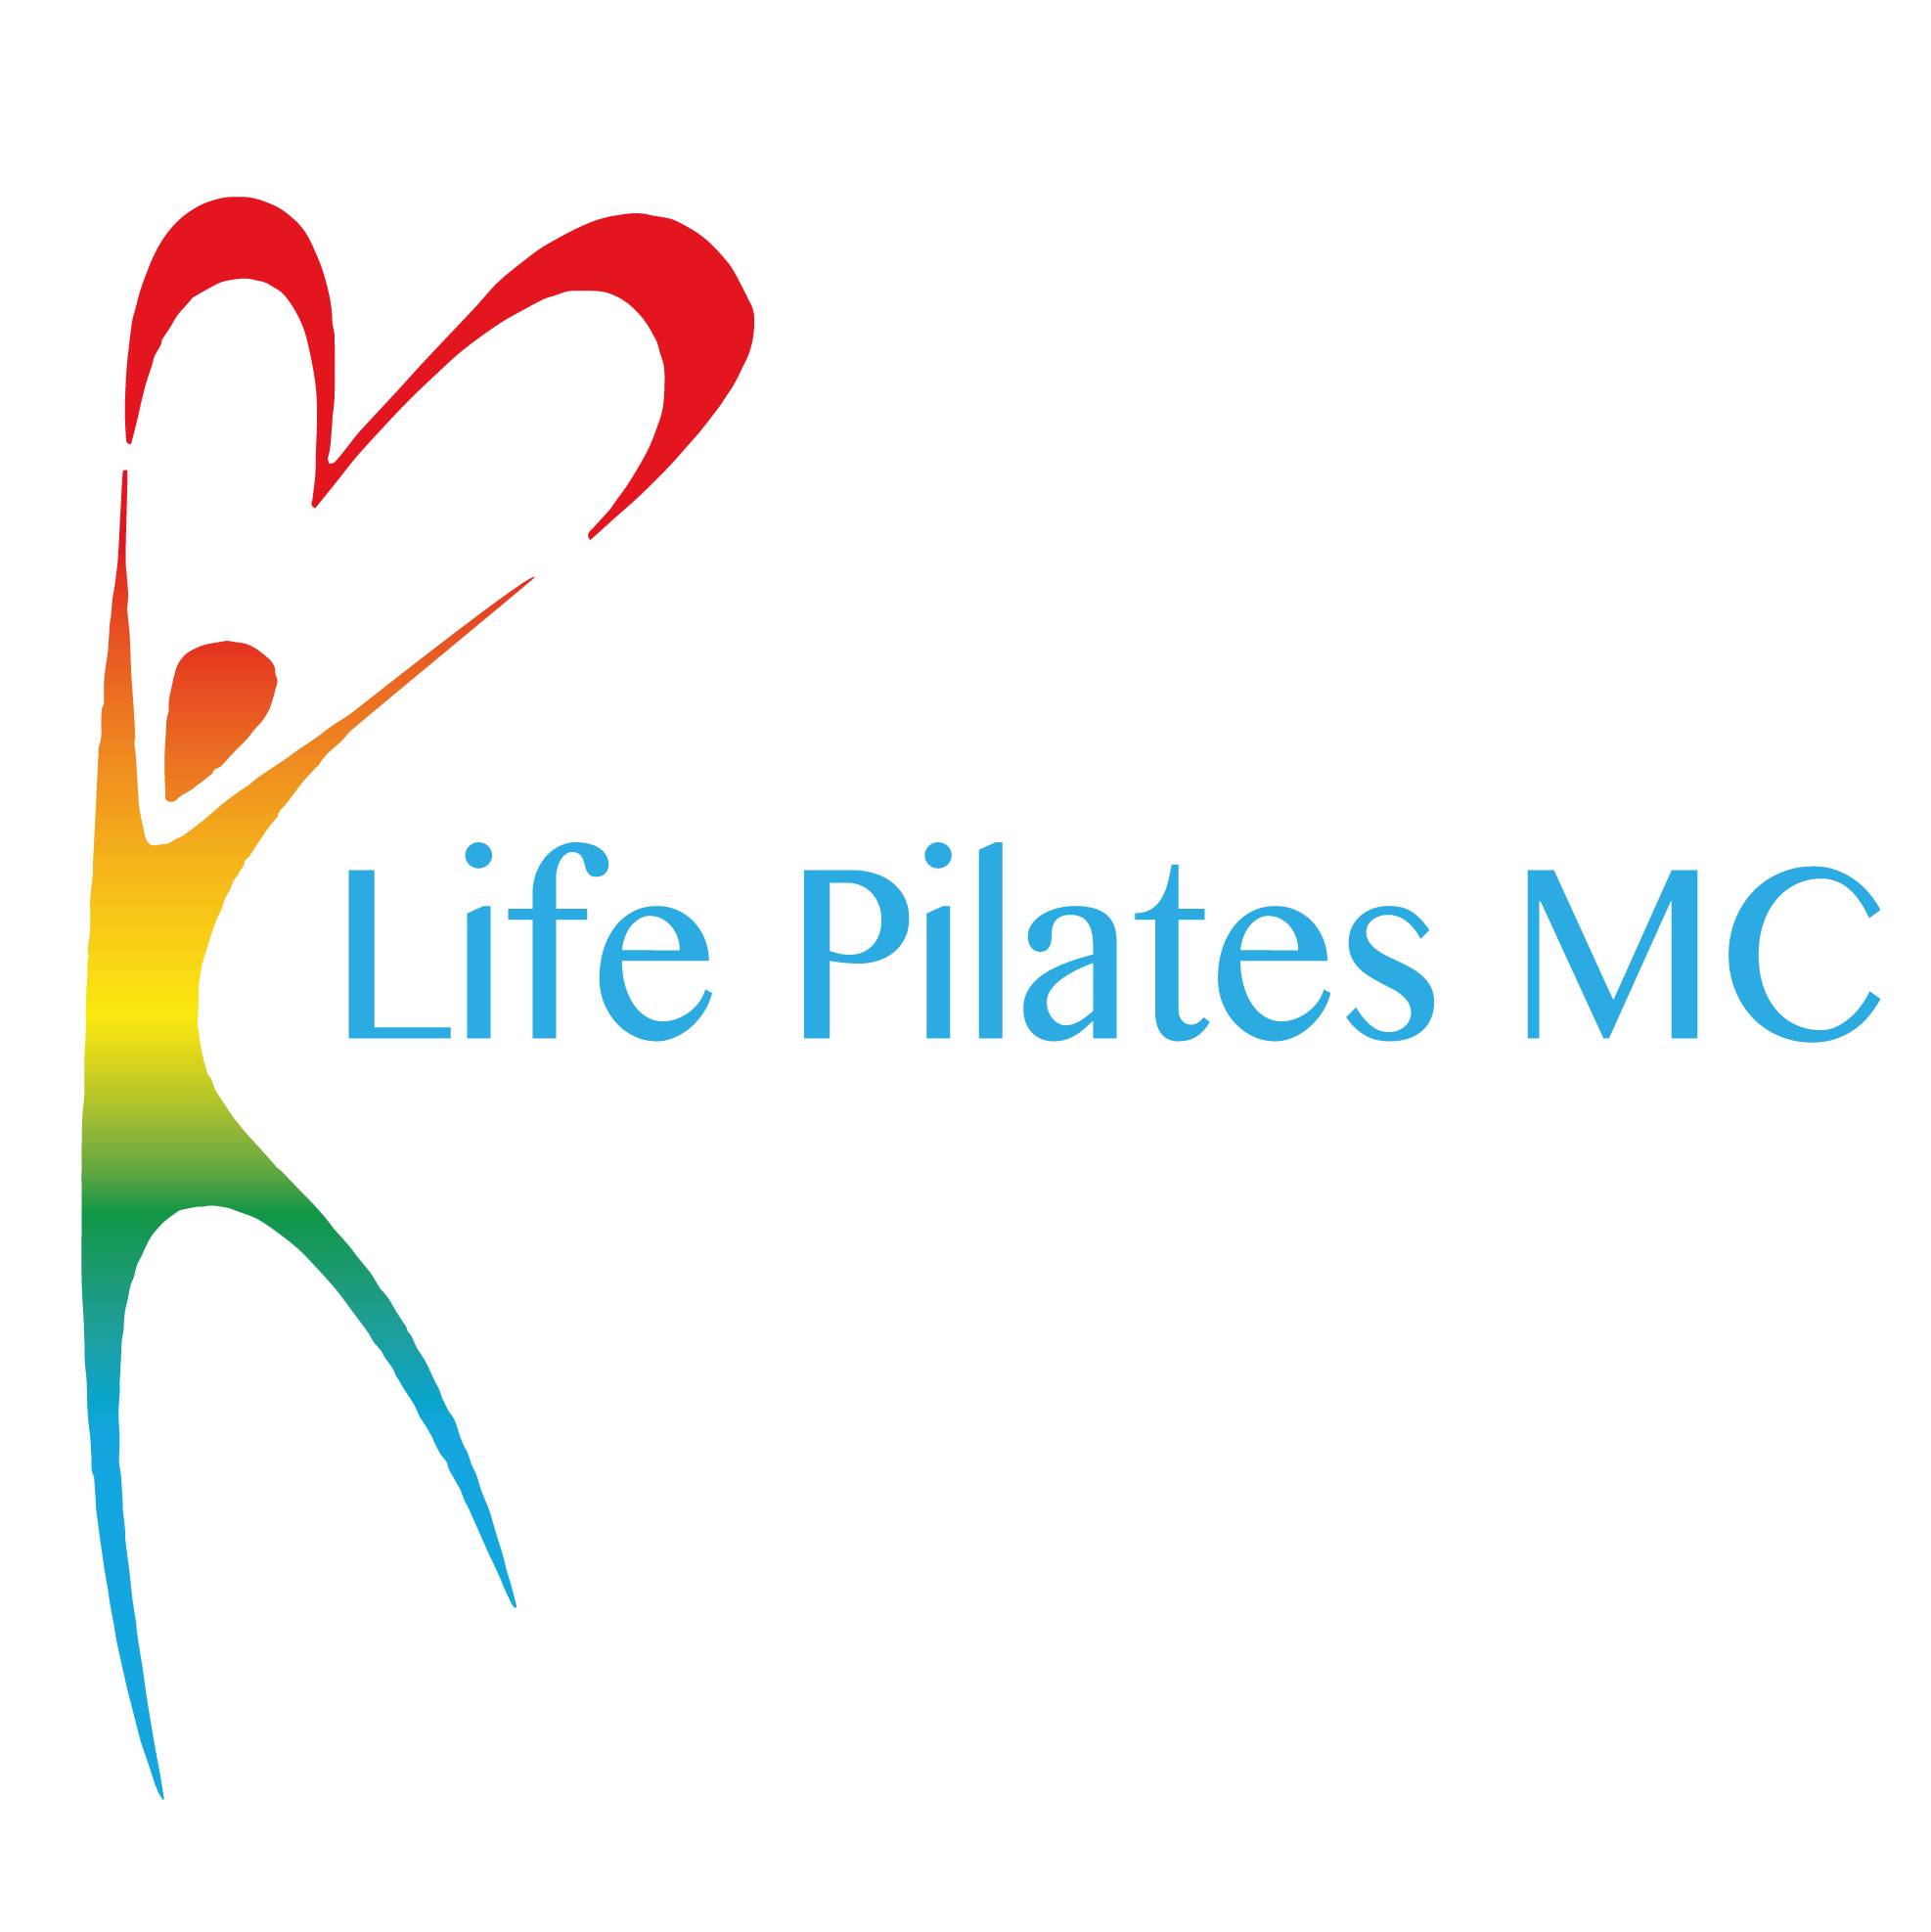 Life Pilates